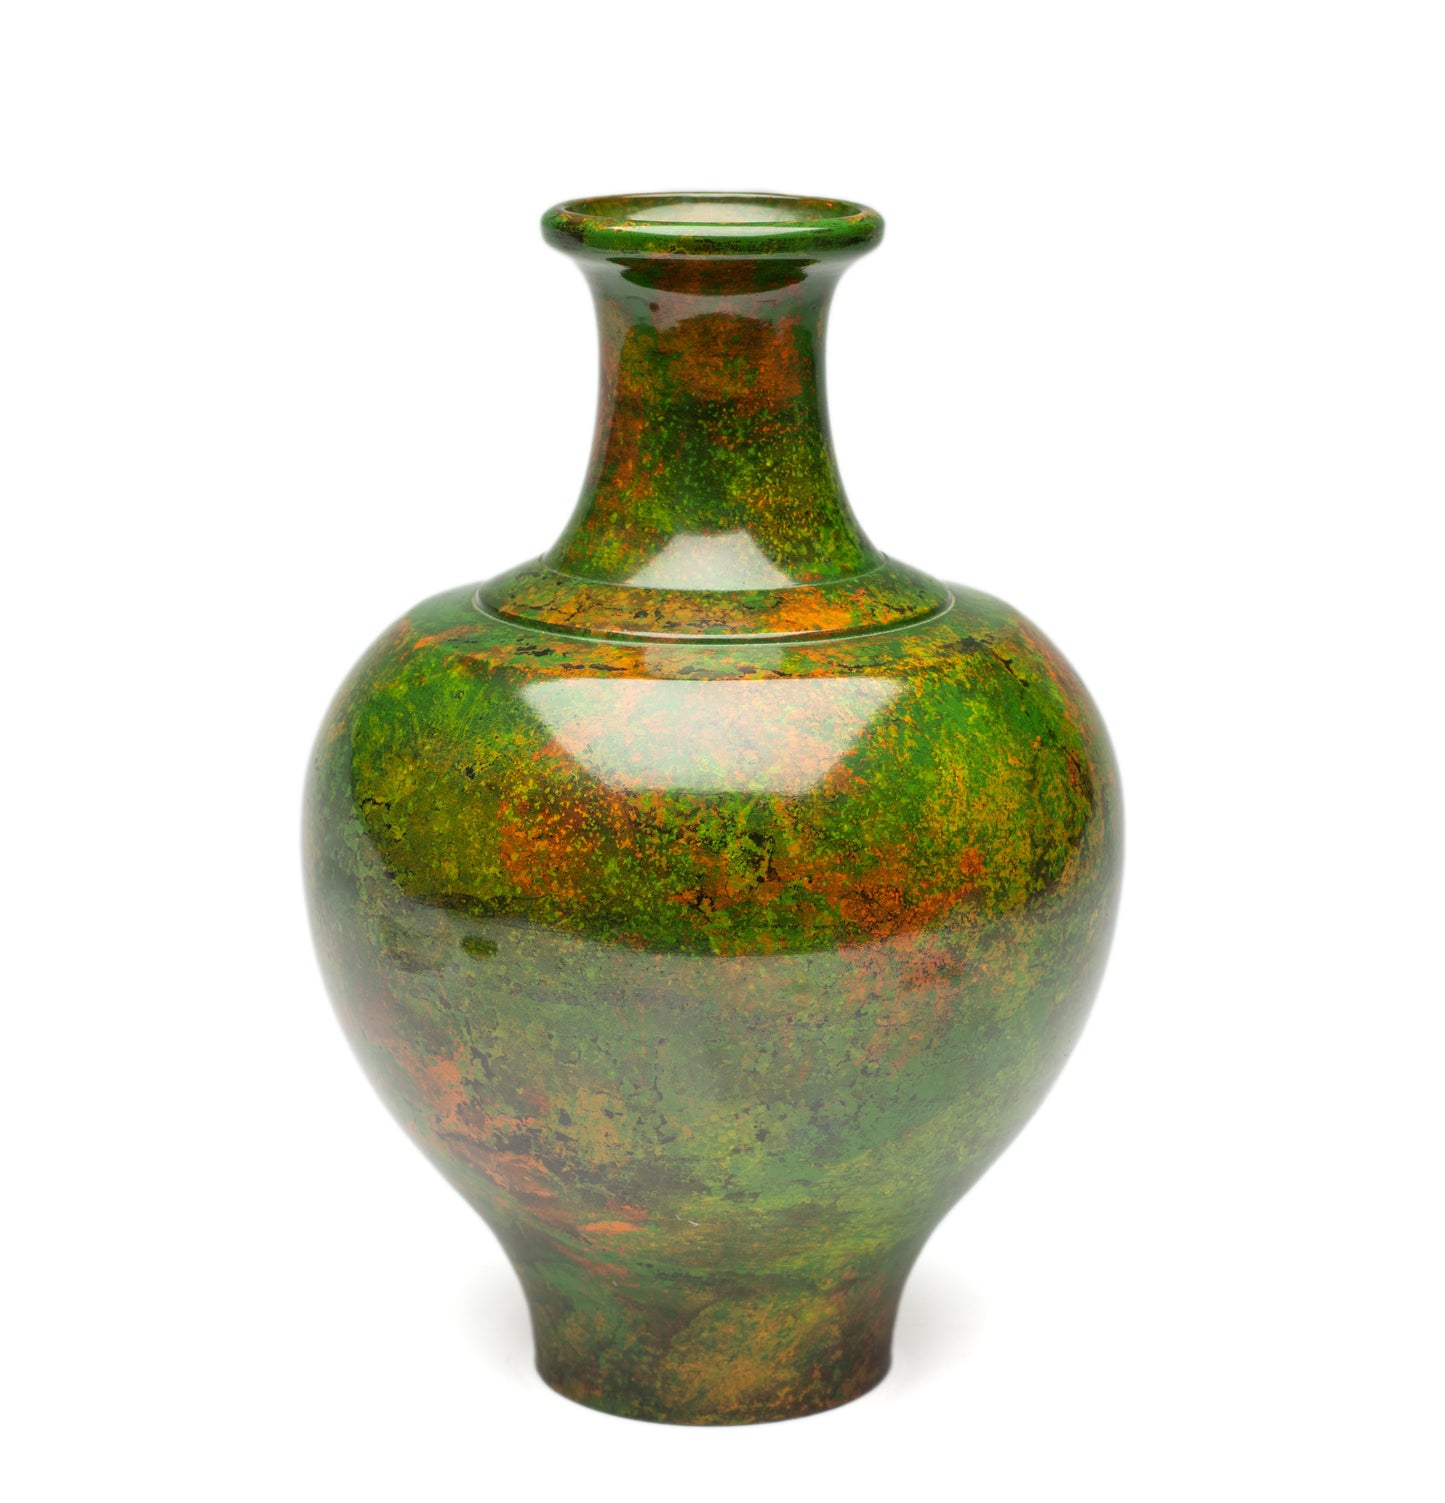 Fine Vintage Japanese Mossy Green Patinated Bronze Ikebana Vase by Shuzan 秀山 (Code 2192)